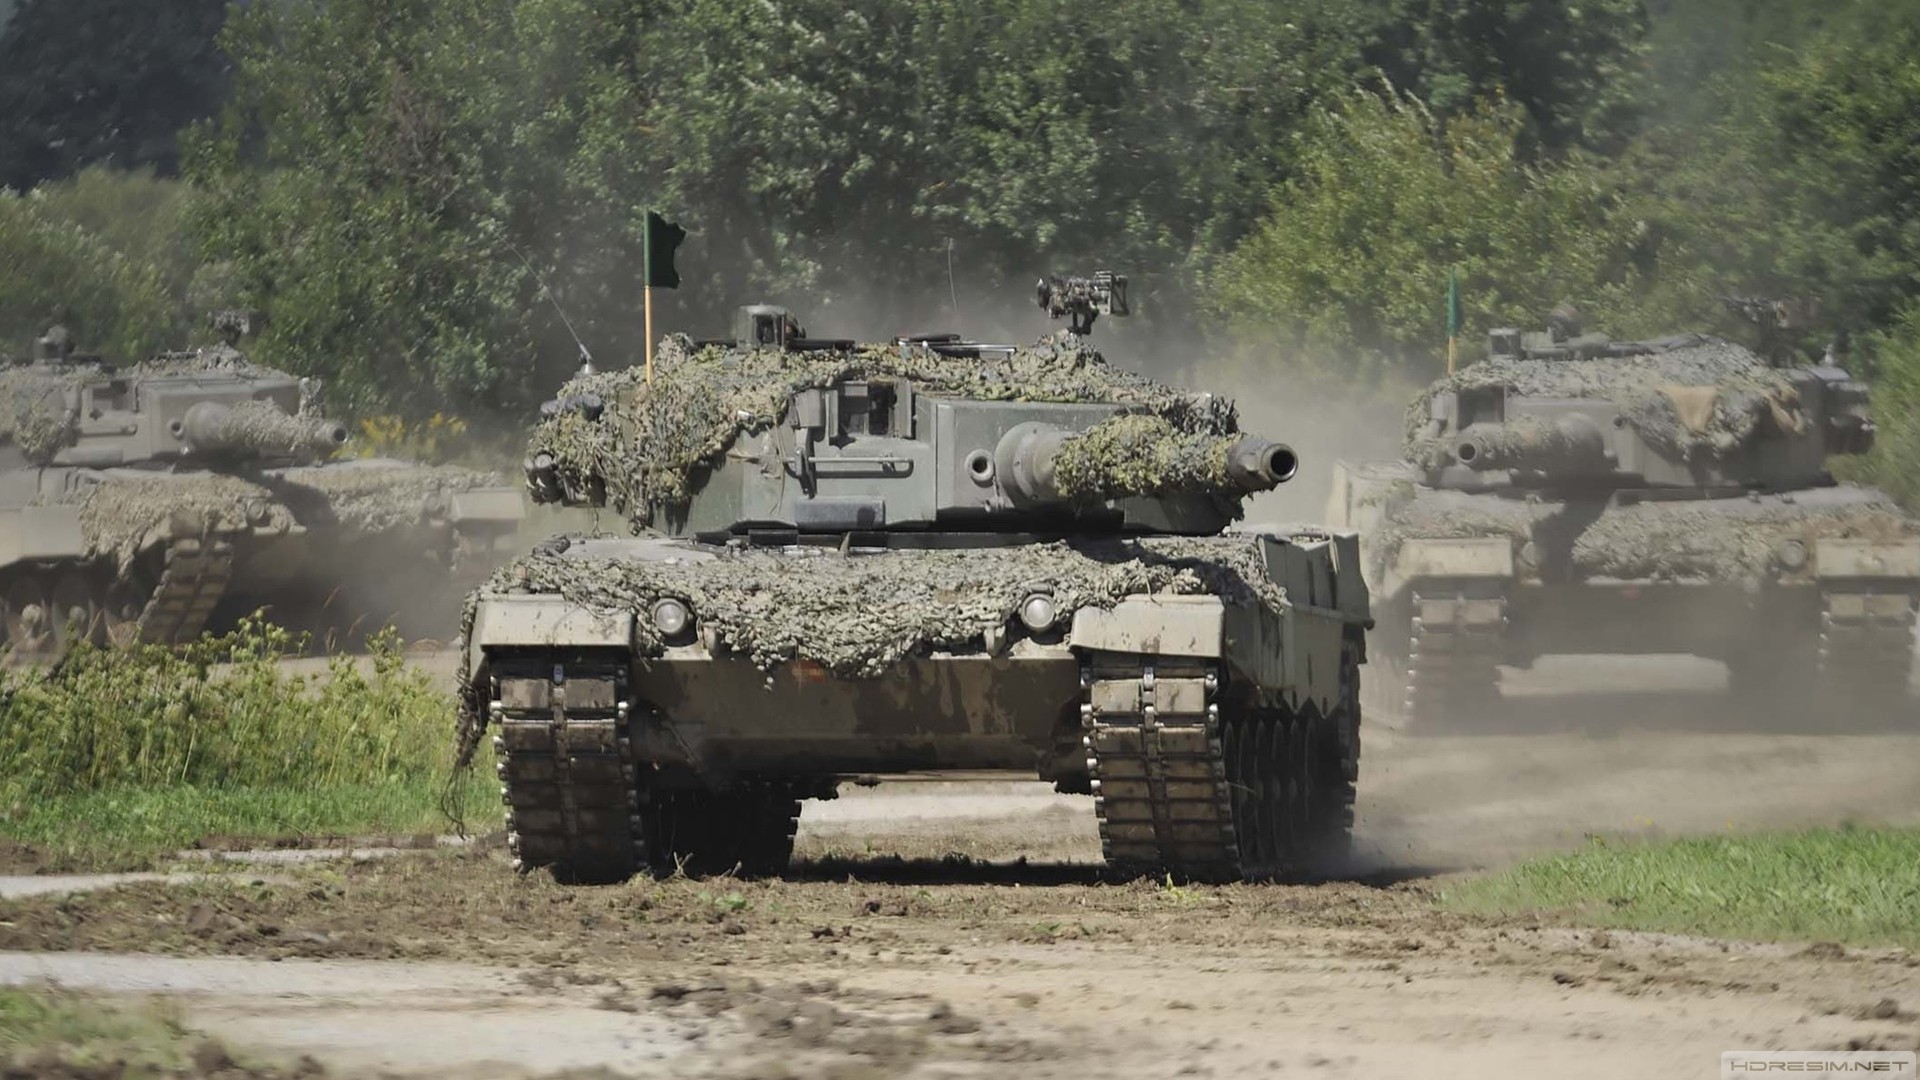 leopard,tank,askeri taşıt,orman,test